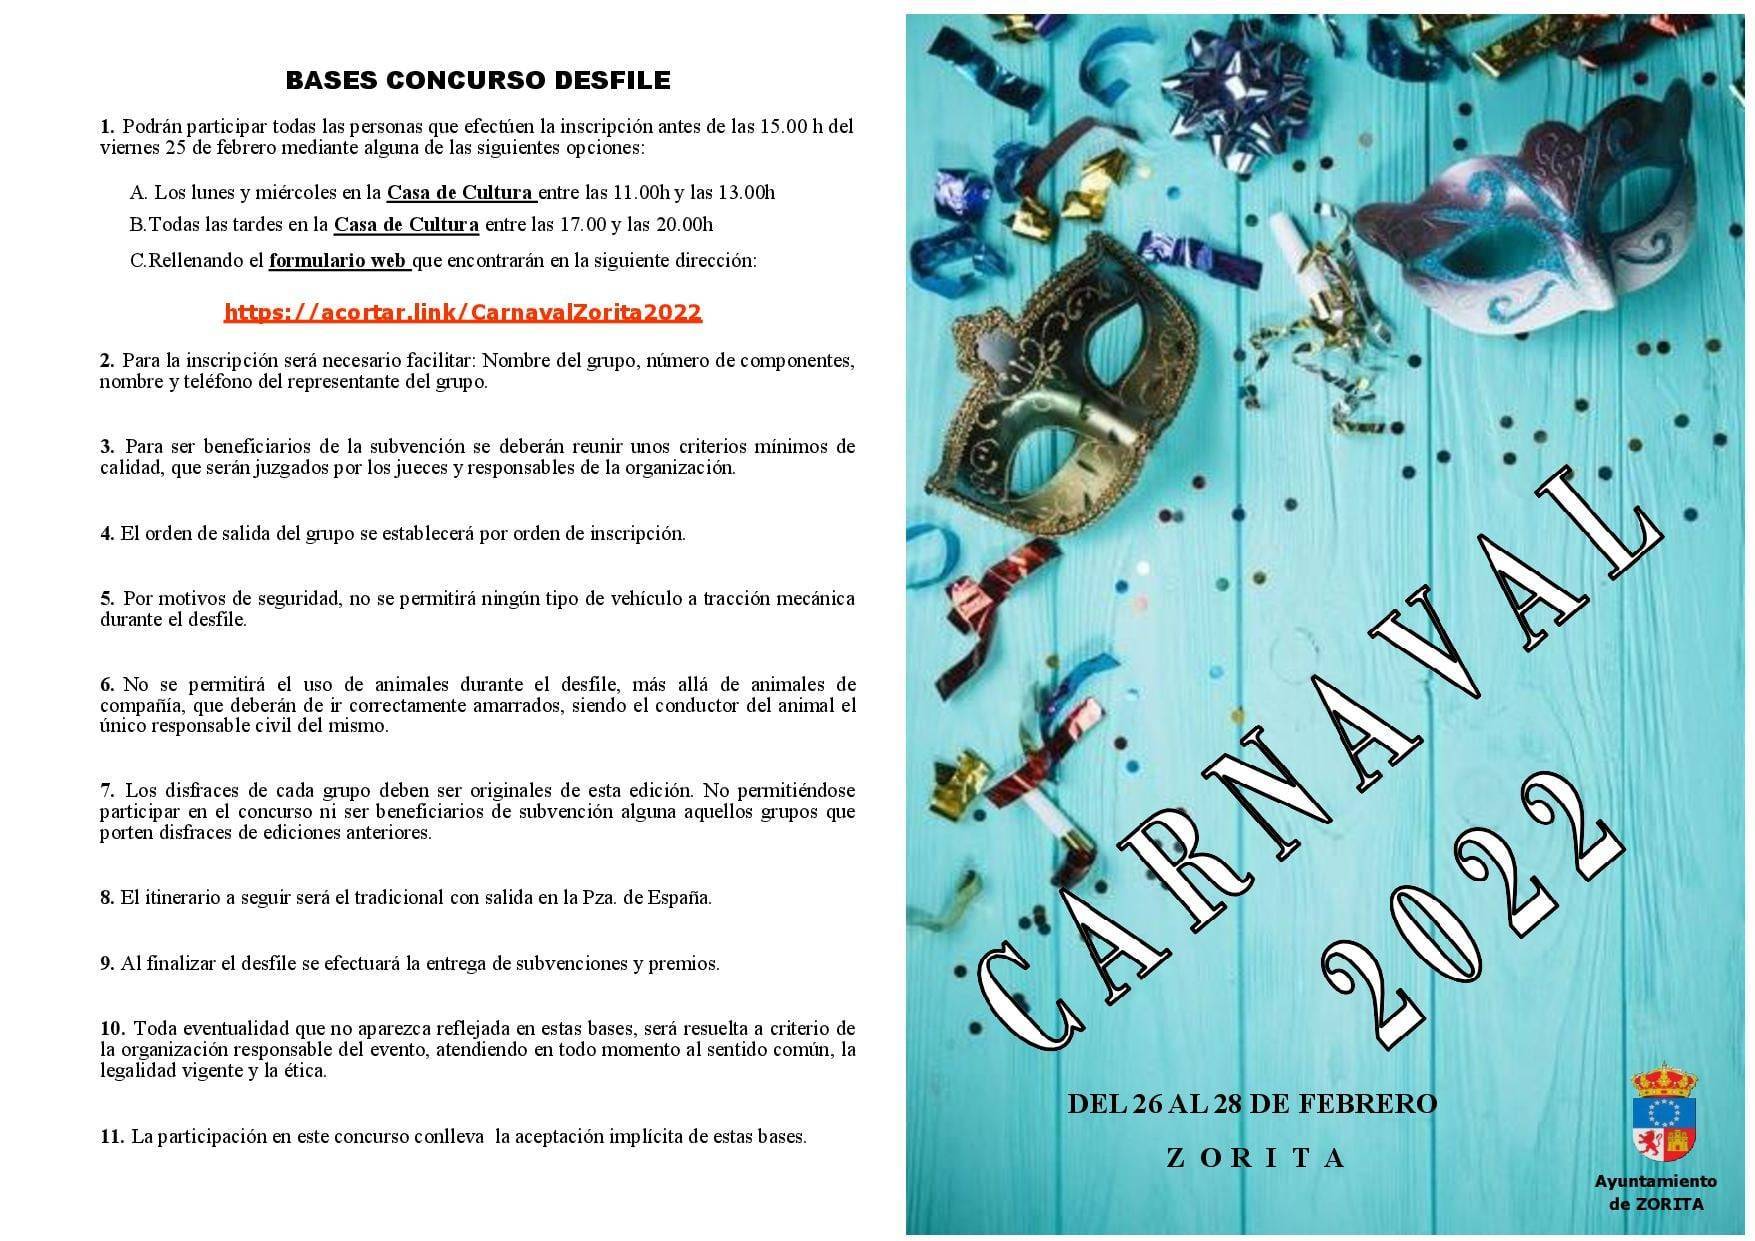 Carnaval (2022) - Zorita (Cáceres) 2